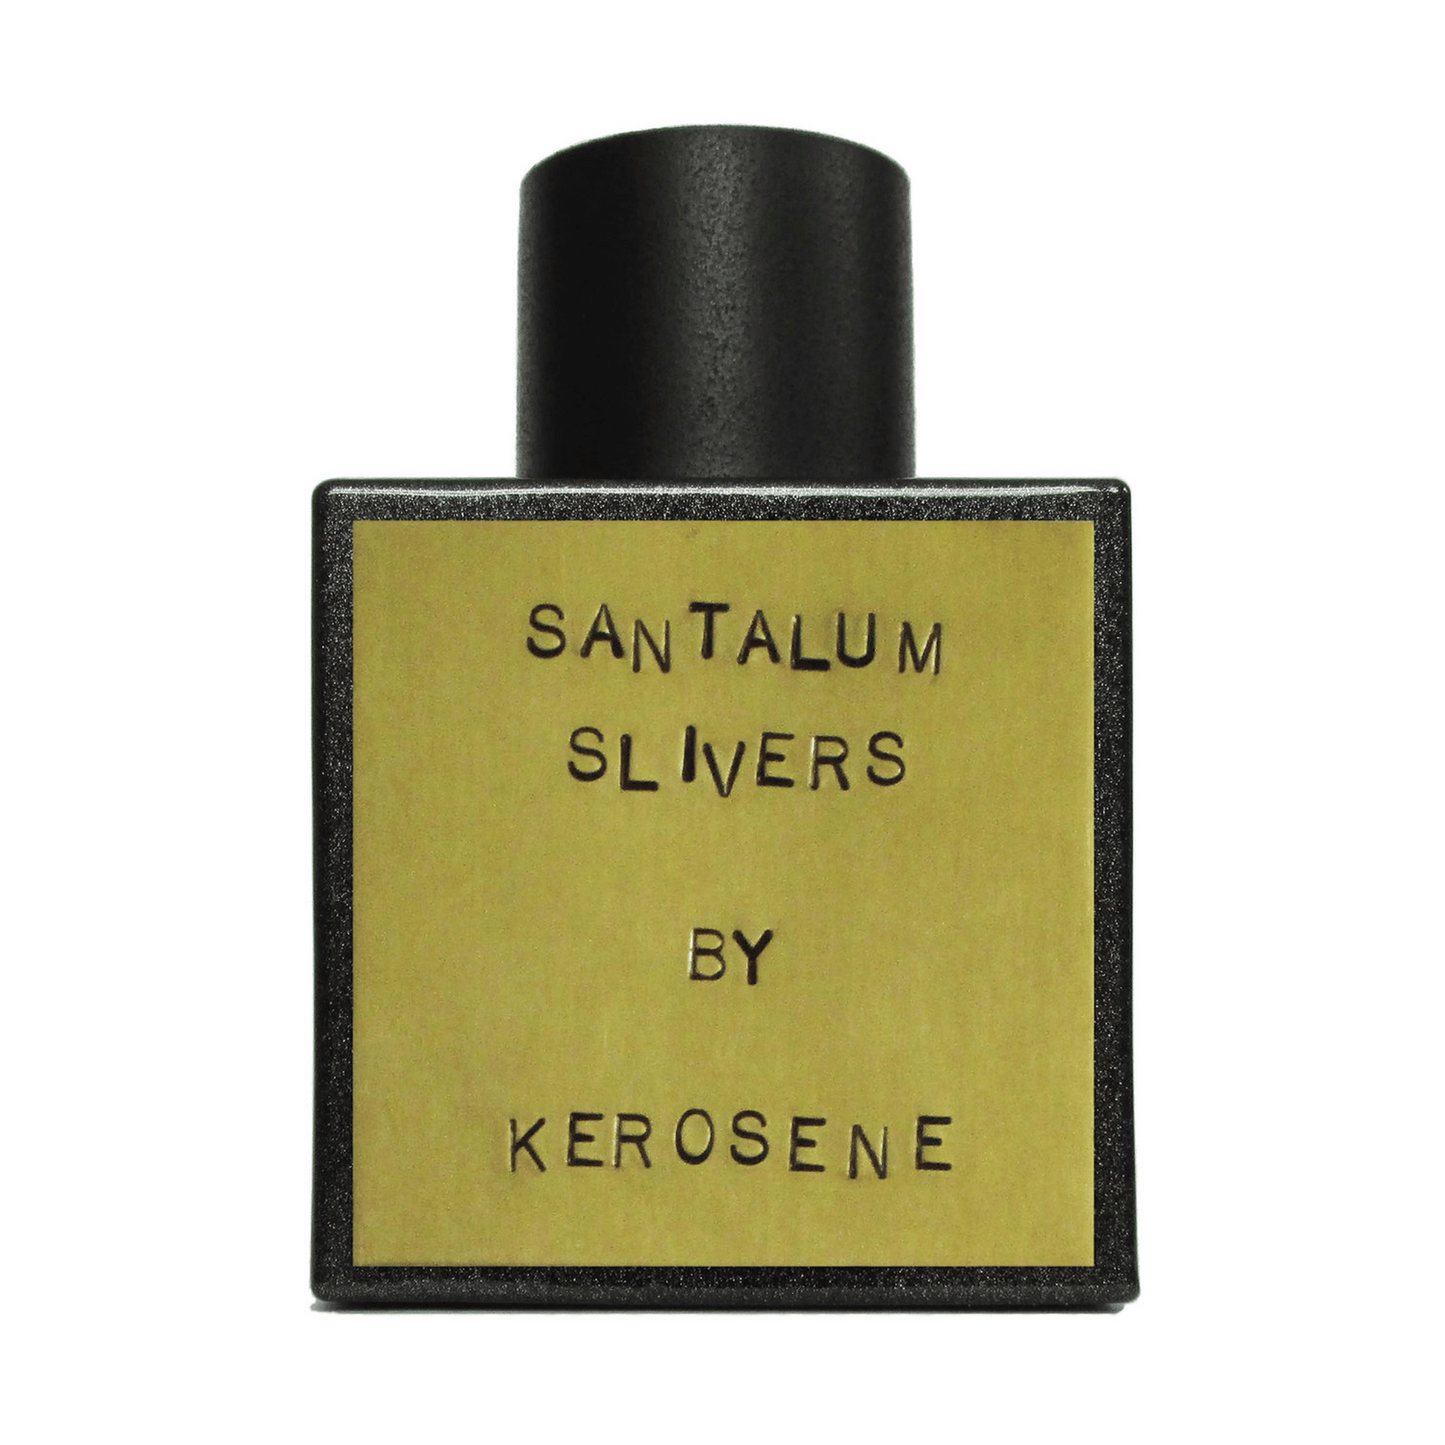 Primary Image of Santalum Slivers Eau de Parfum